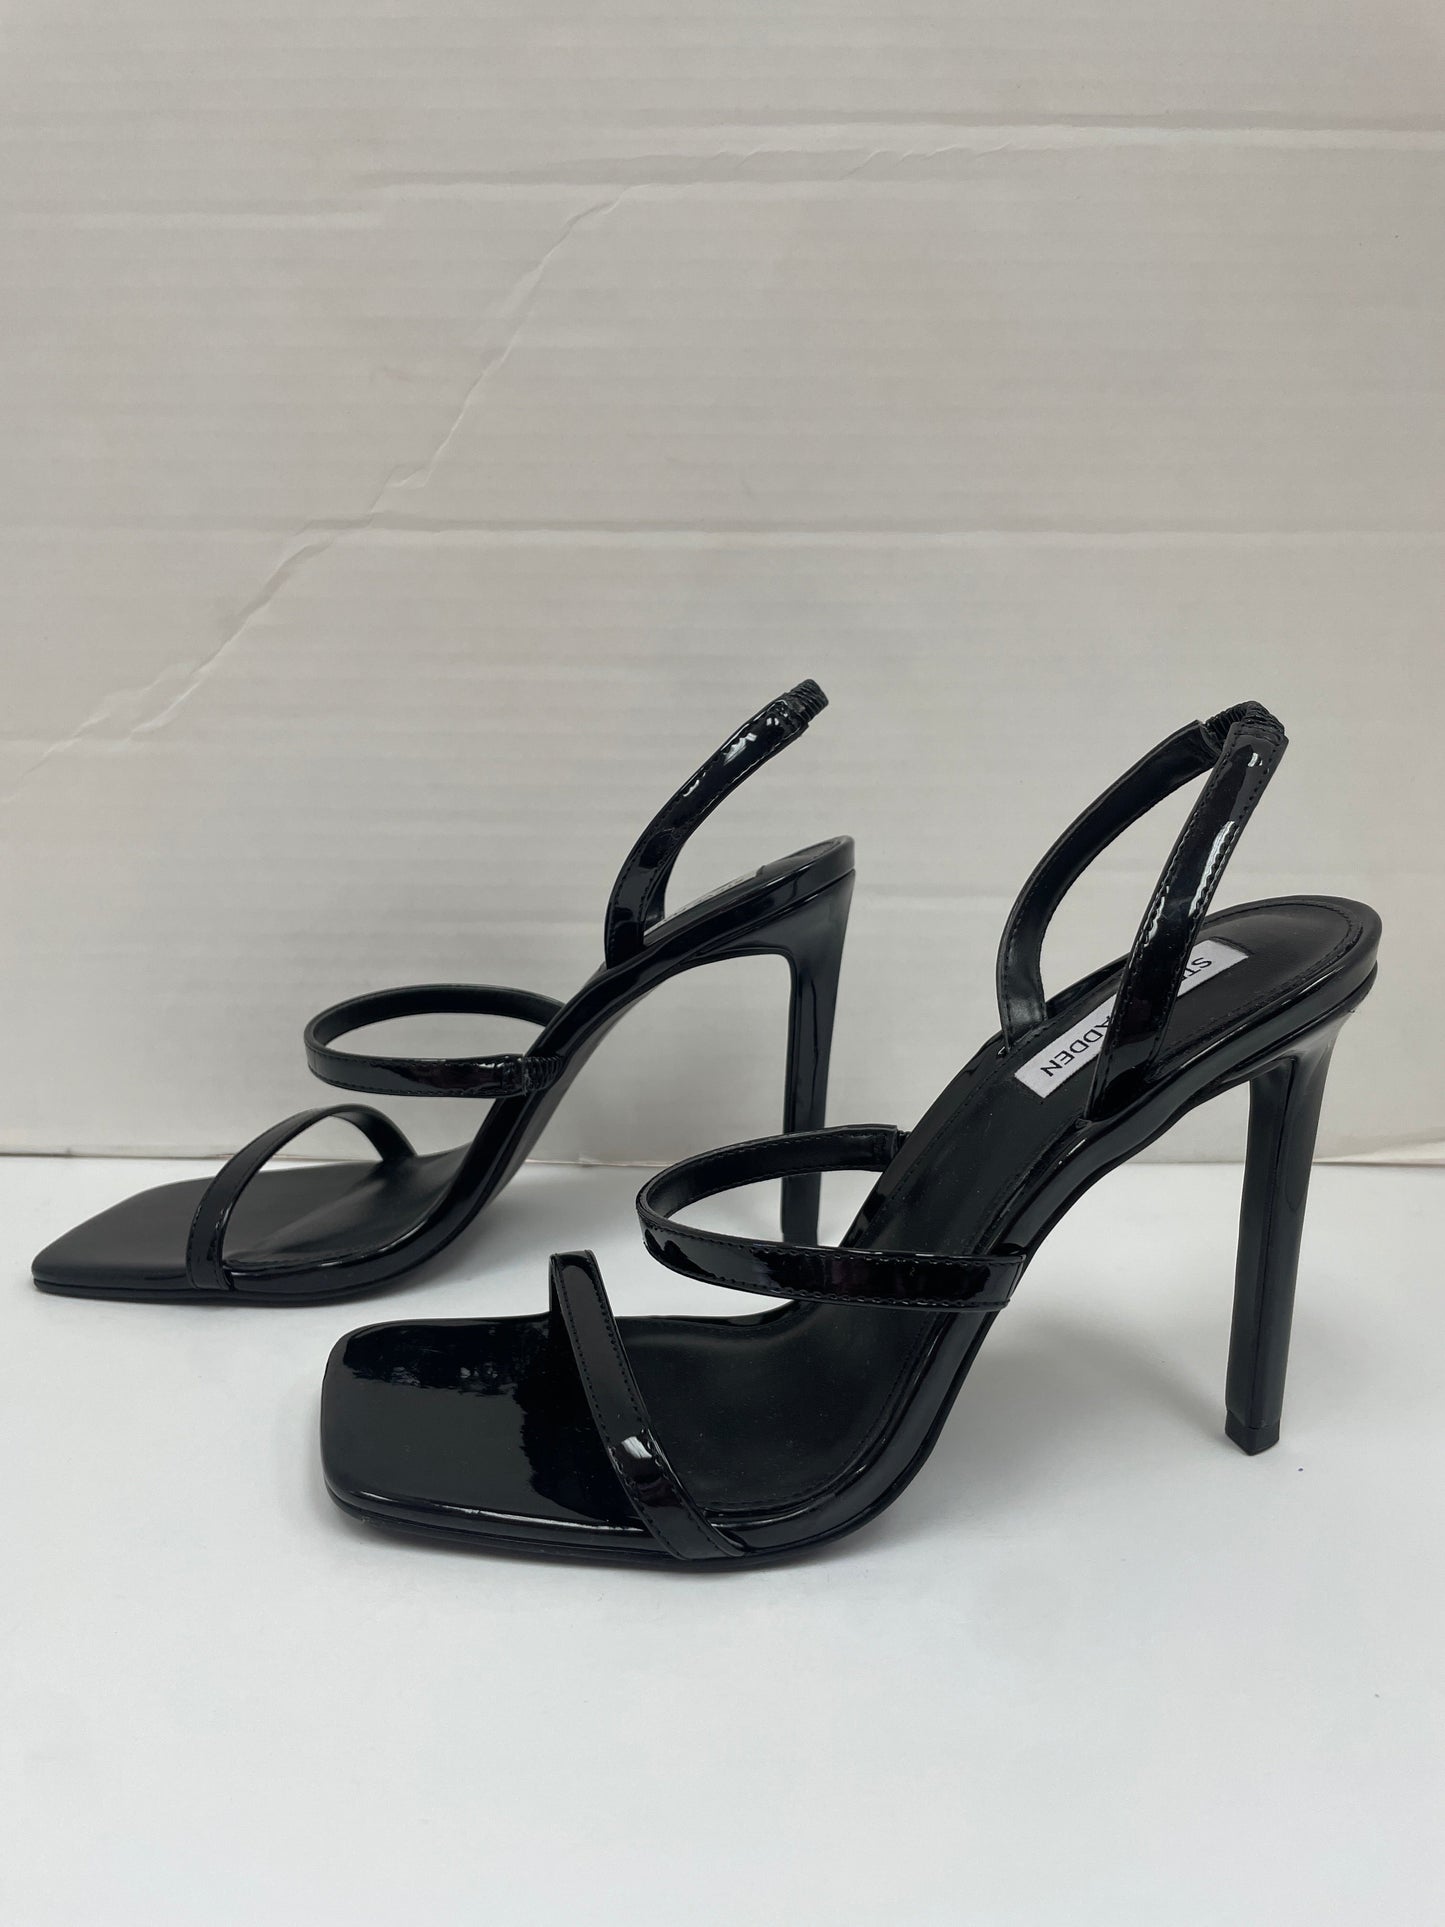 Sandals Heels Stiletto By Steve Madden  Size: 10